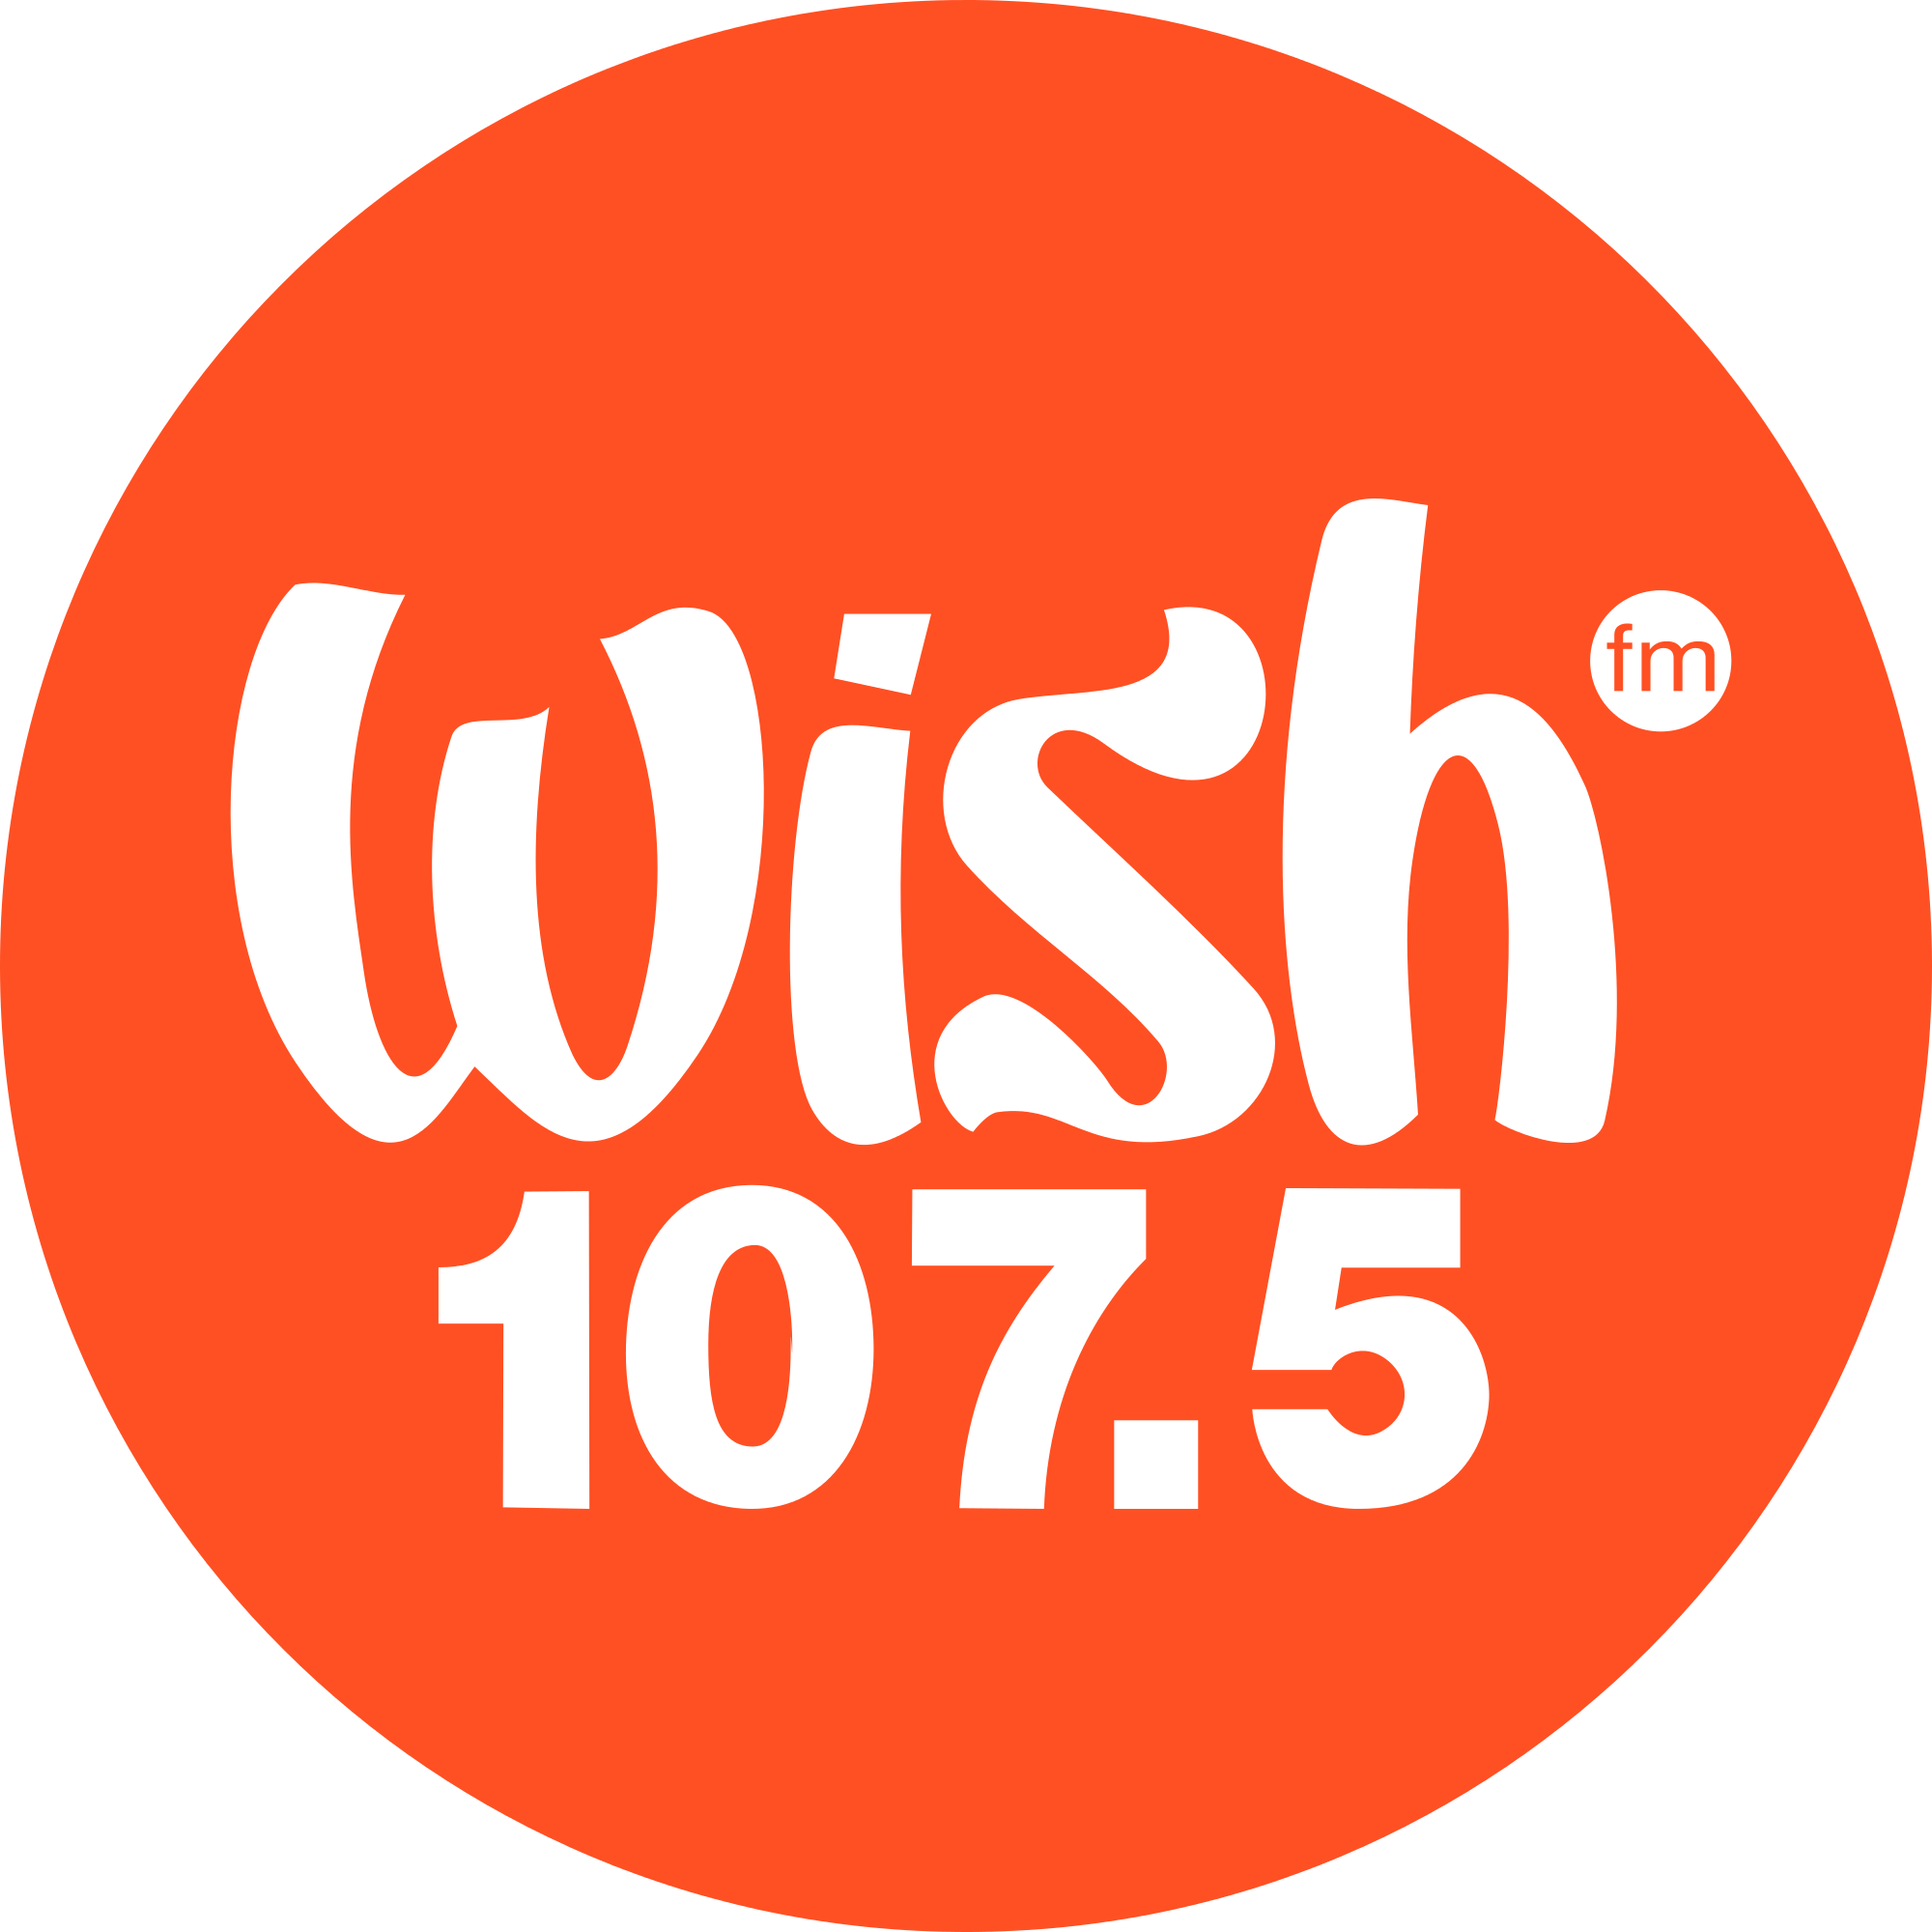 Wish Logo - File:Wish 107.5 (2015).svg - Wikimedia Commons